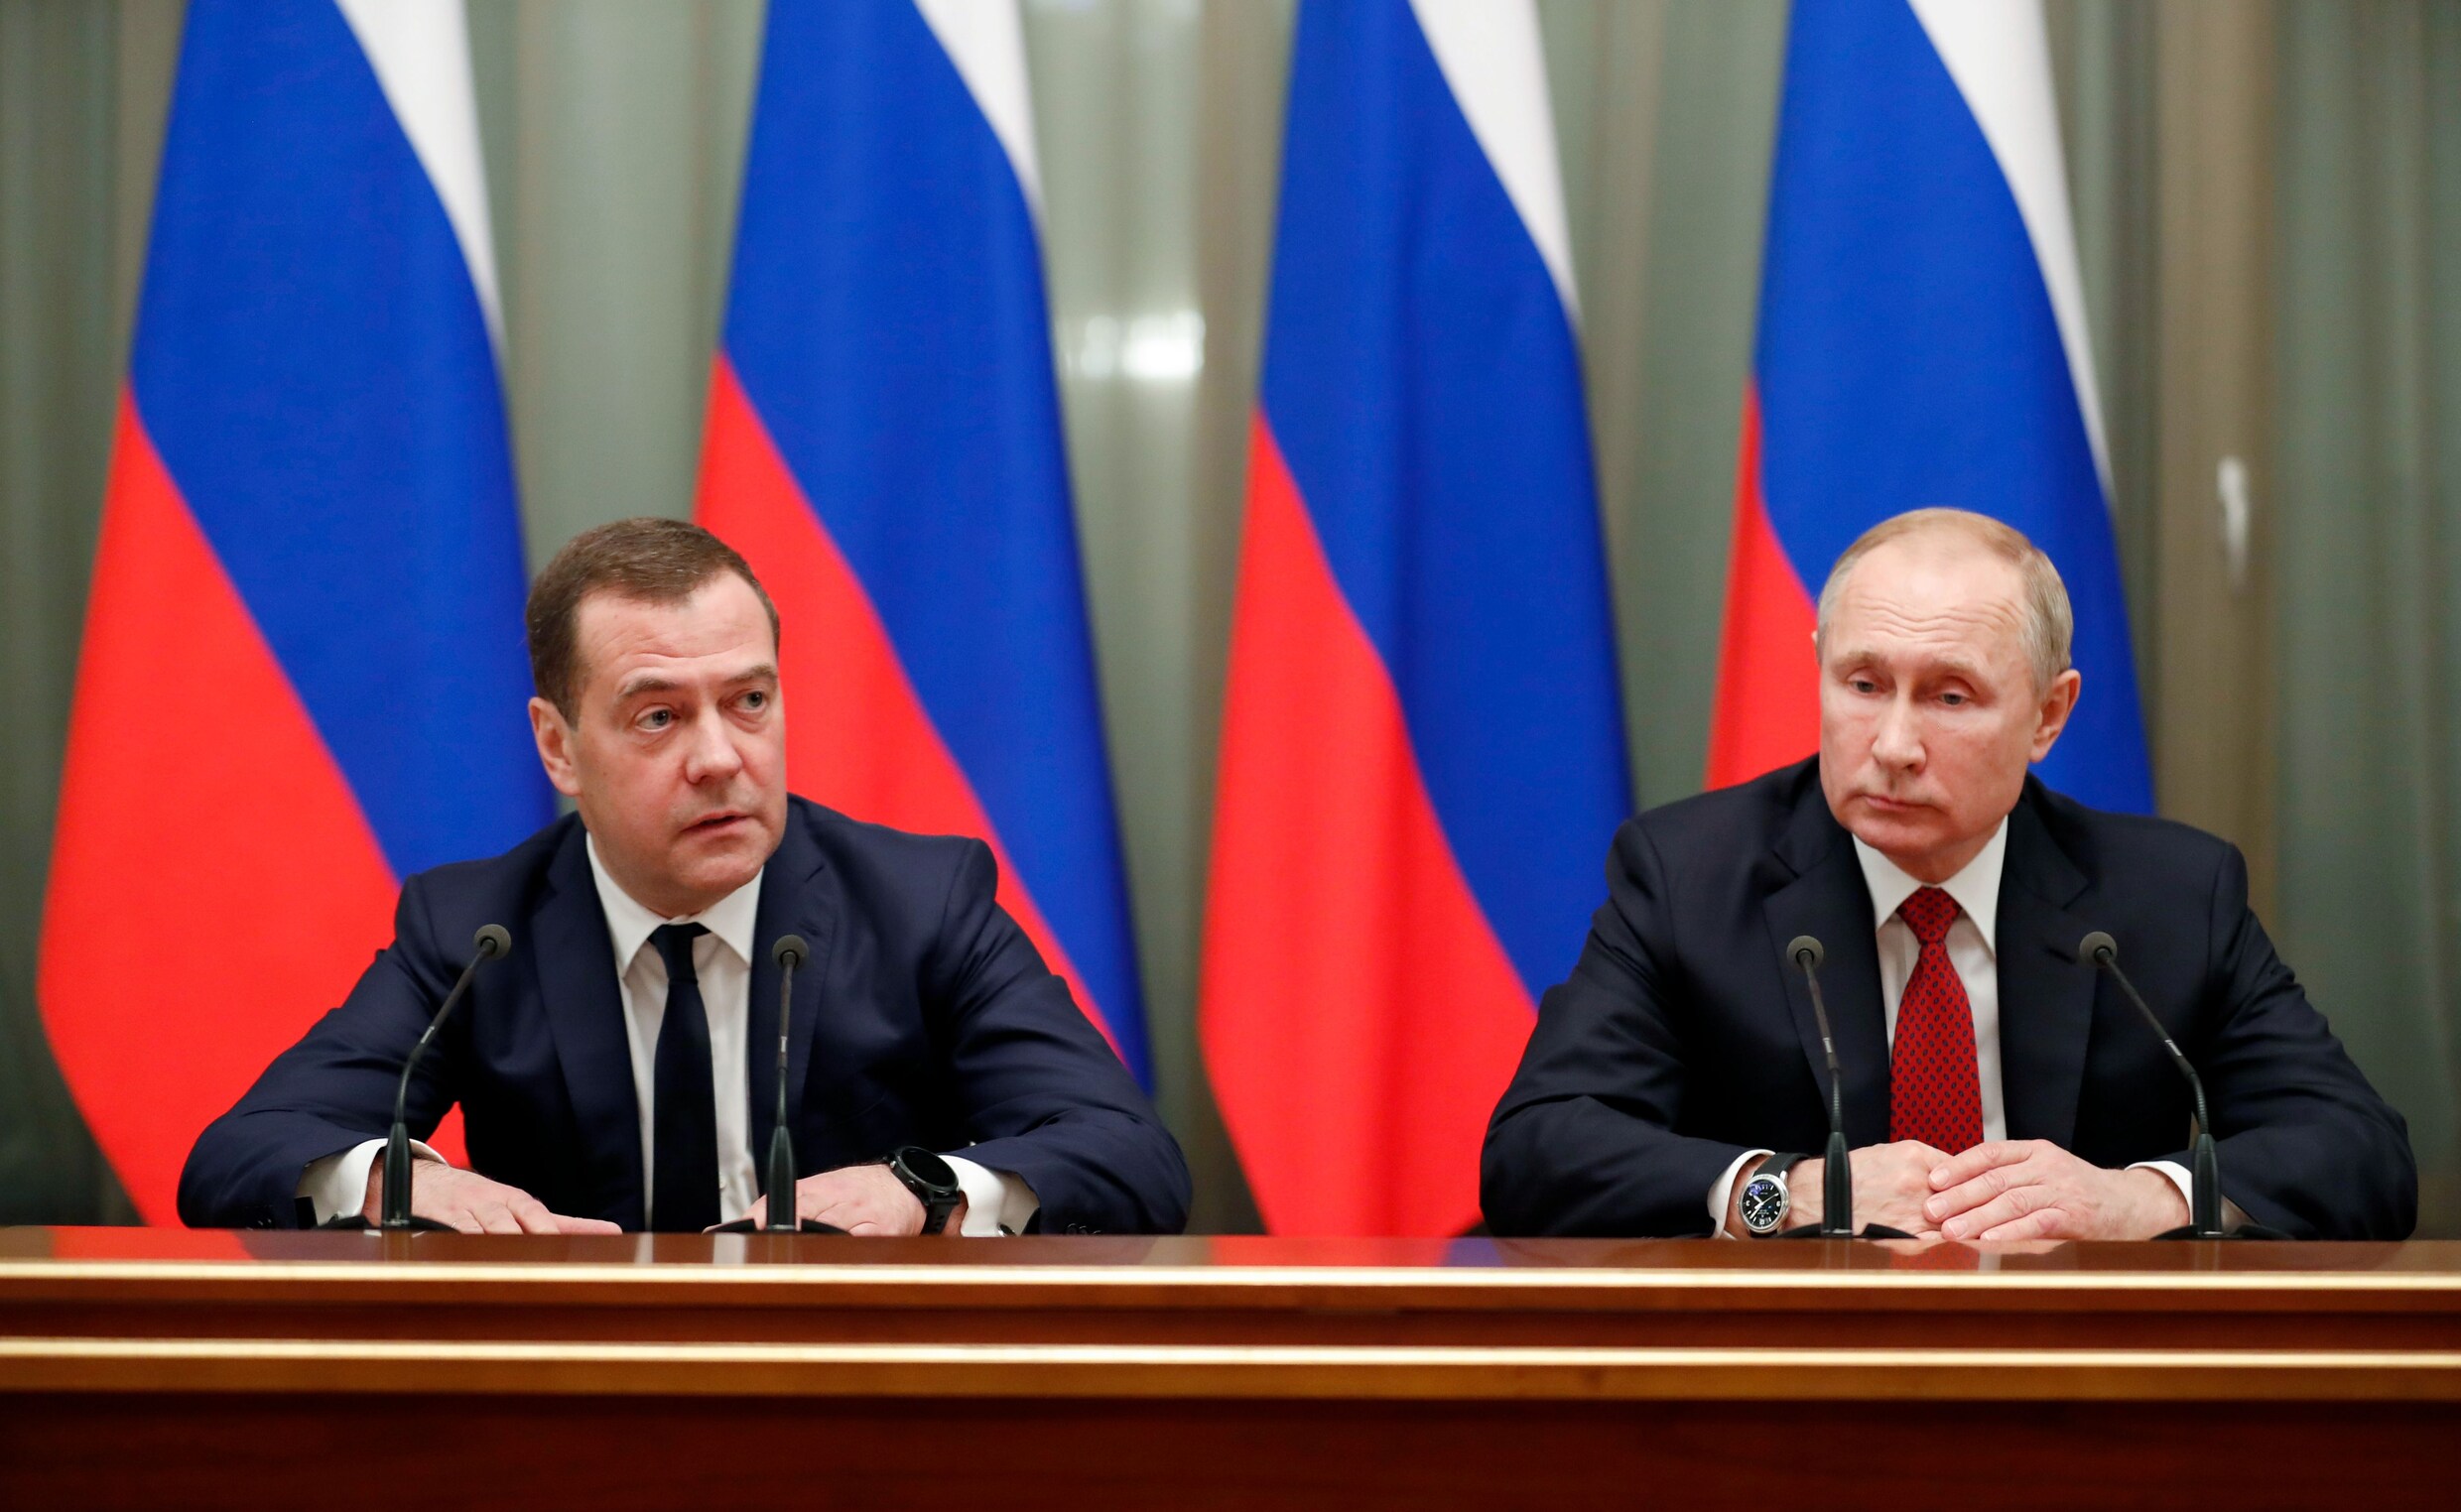 Voltallige Russische regering neemt ontslag, Michail Misjoestin nieuwe premier